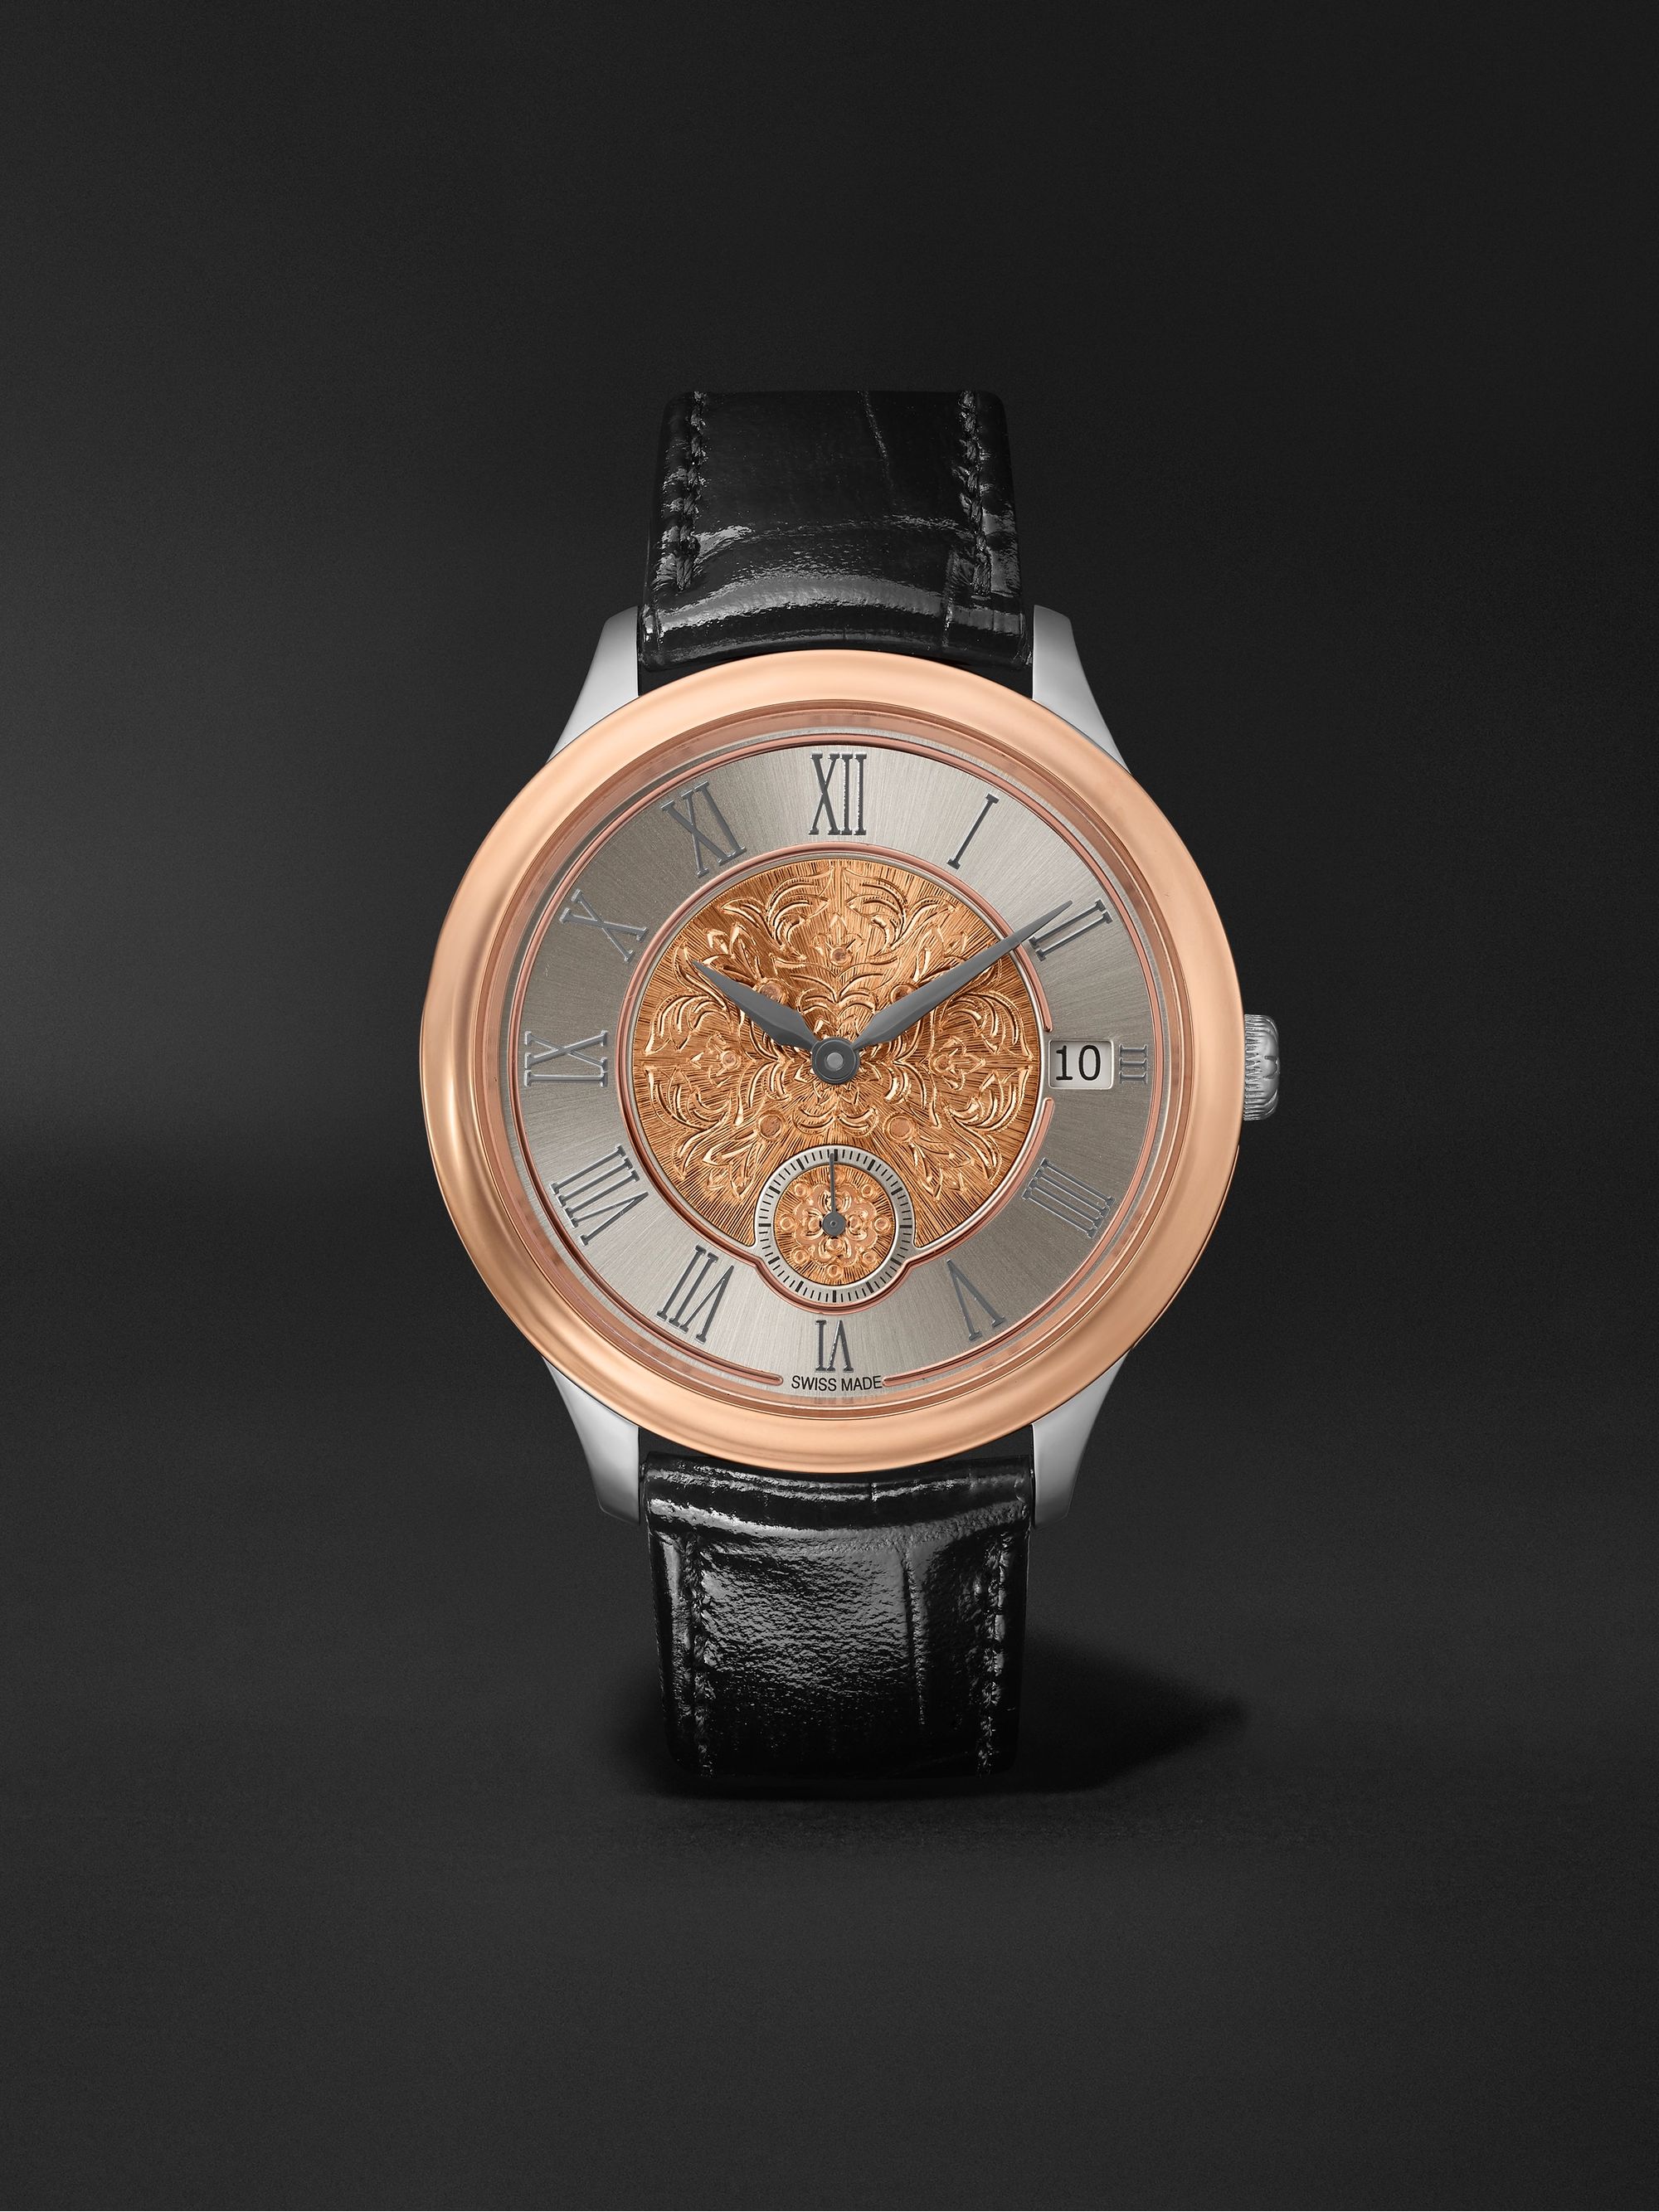 BUCCELLATI Ornatino Automatic 42mm 18-Karat Pink and White Gold and Croc-Effect Leather Watch, Ref. No. WAUMGE013178